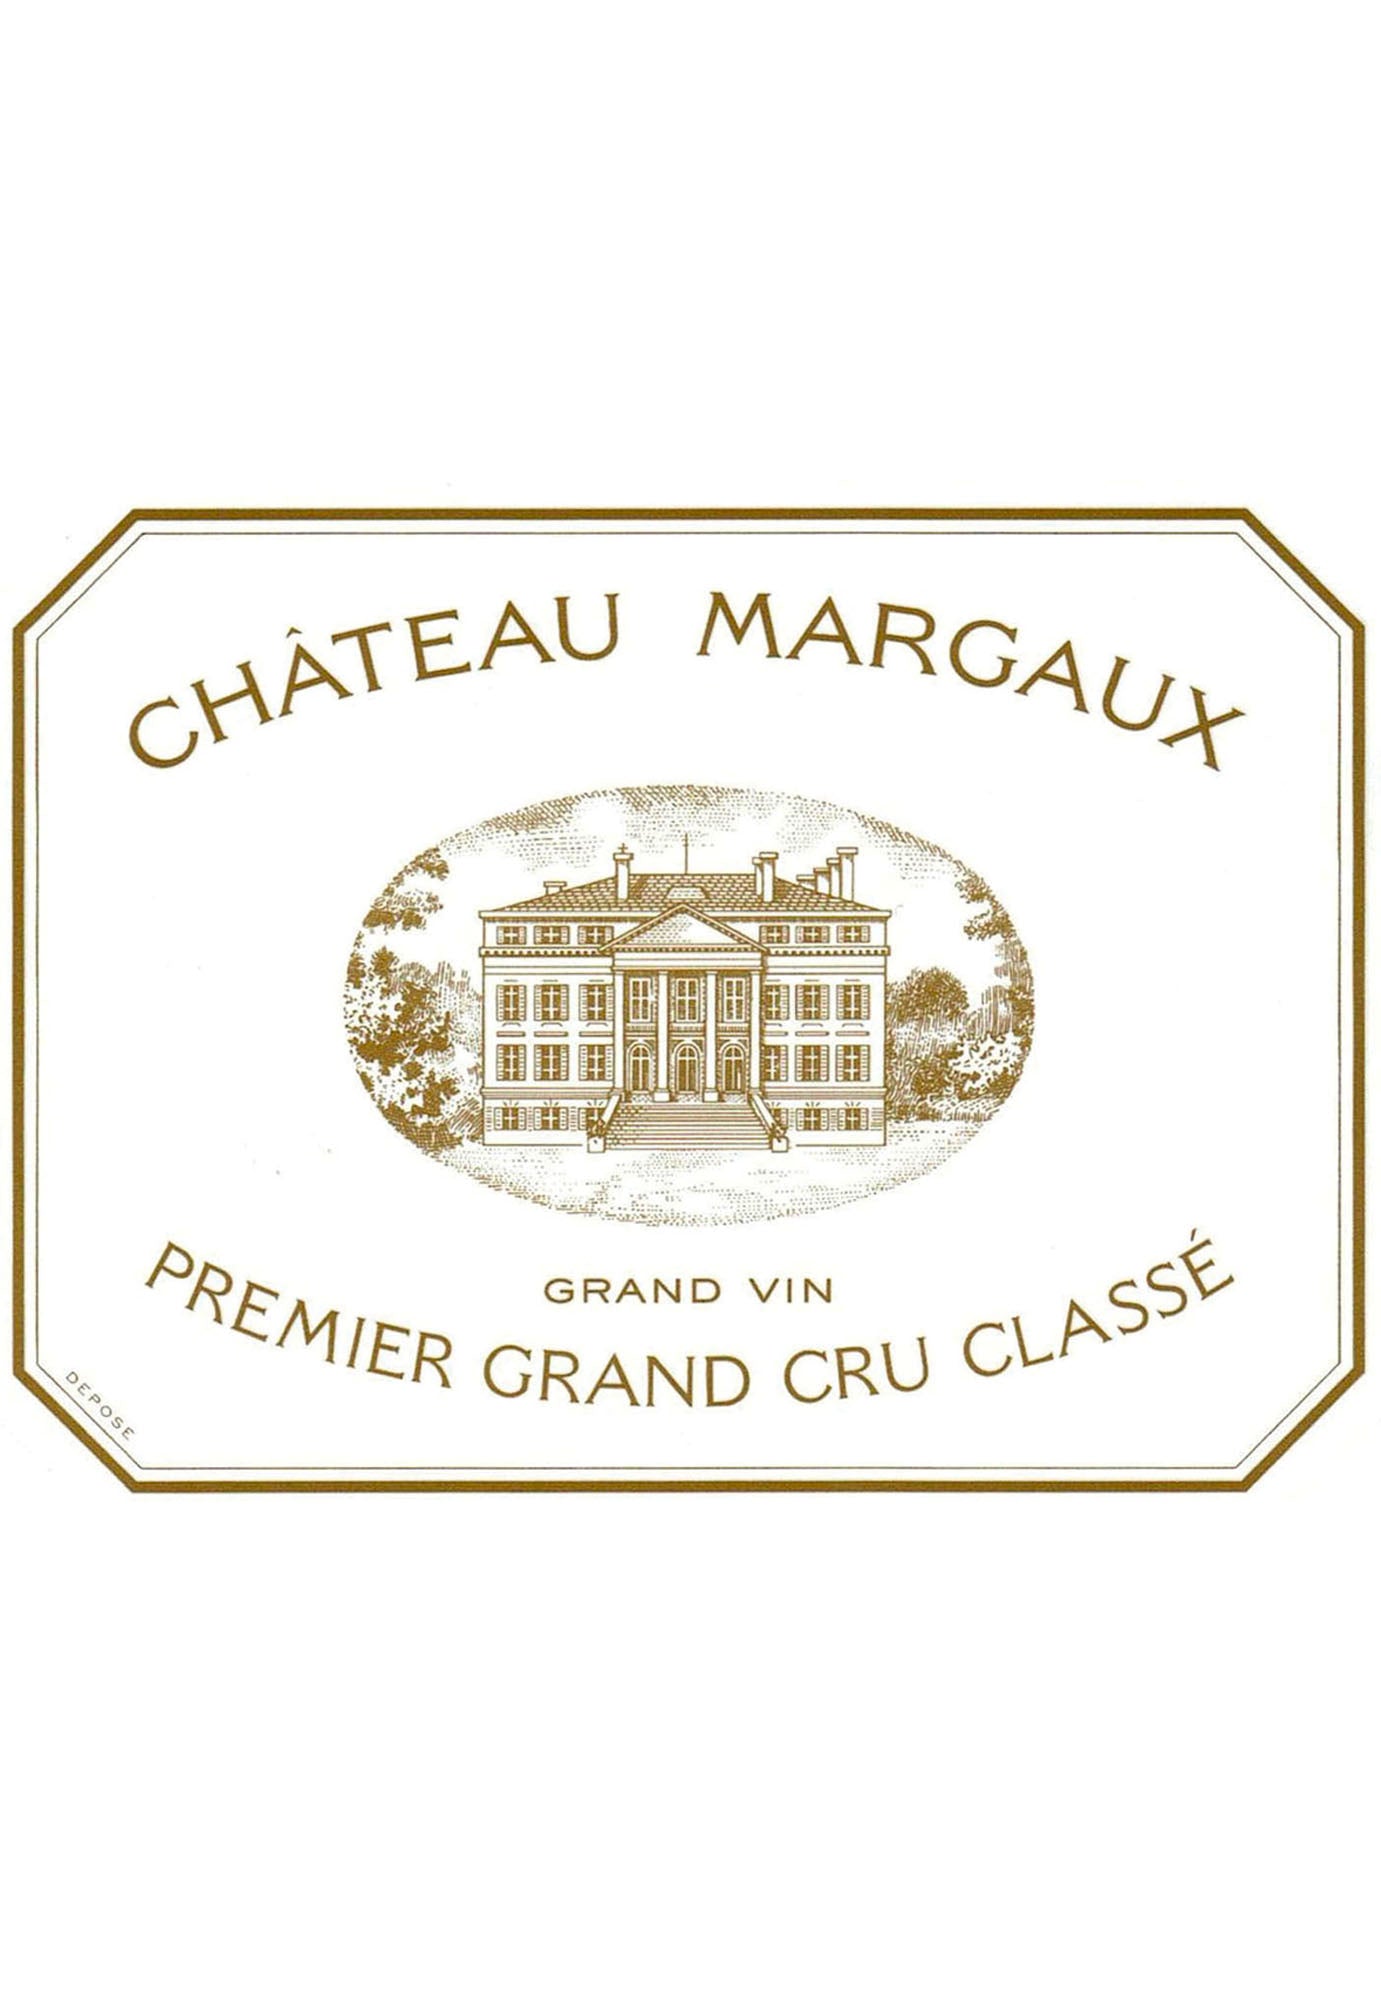 Chateau Margaux Vertical (1978 - 2018) - 41 Bottles